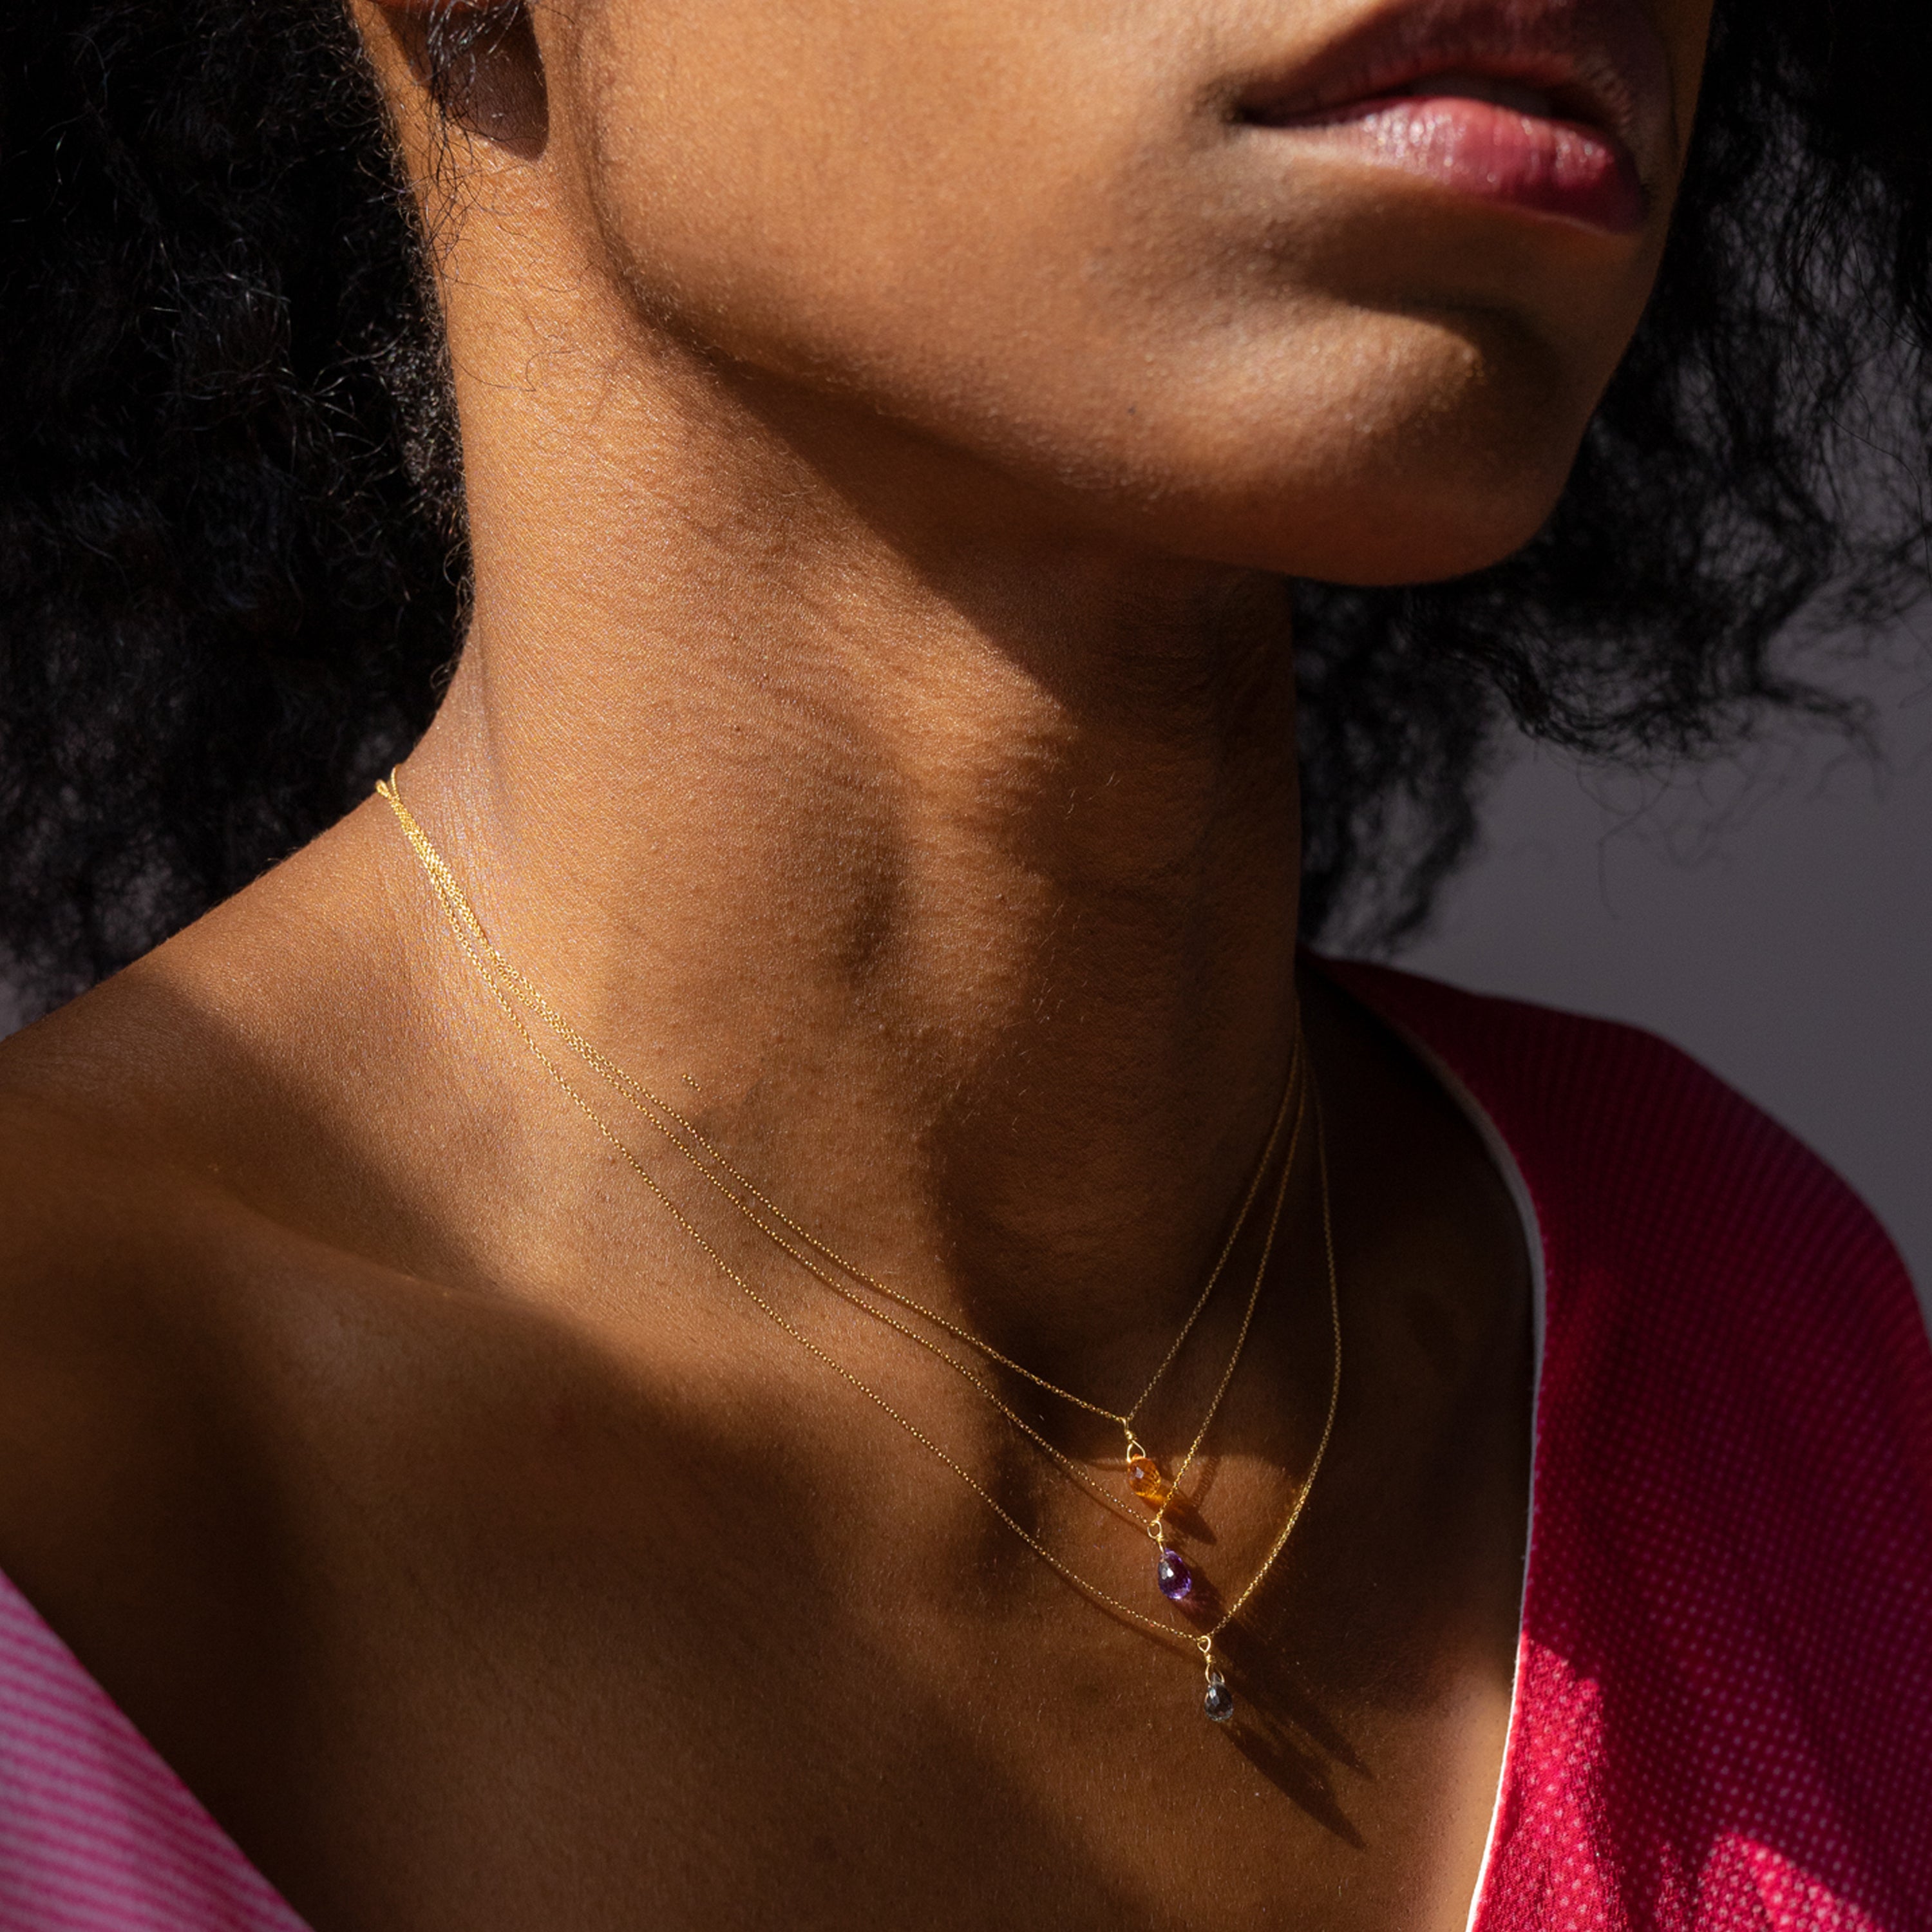 18kt Gold Pink Sapphire Drop Necklace - 41.5cm